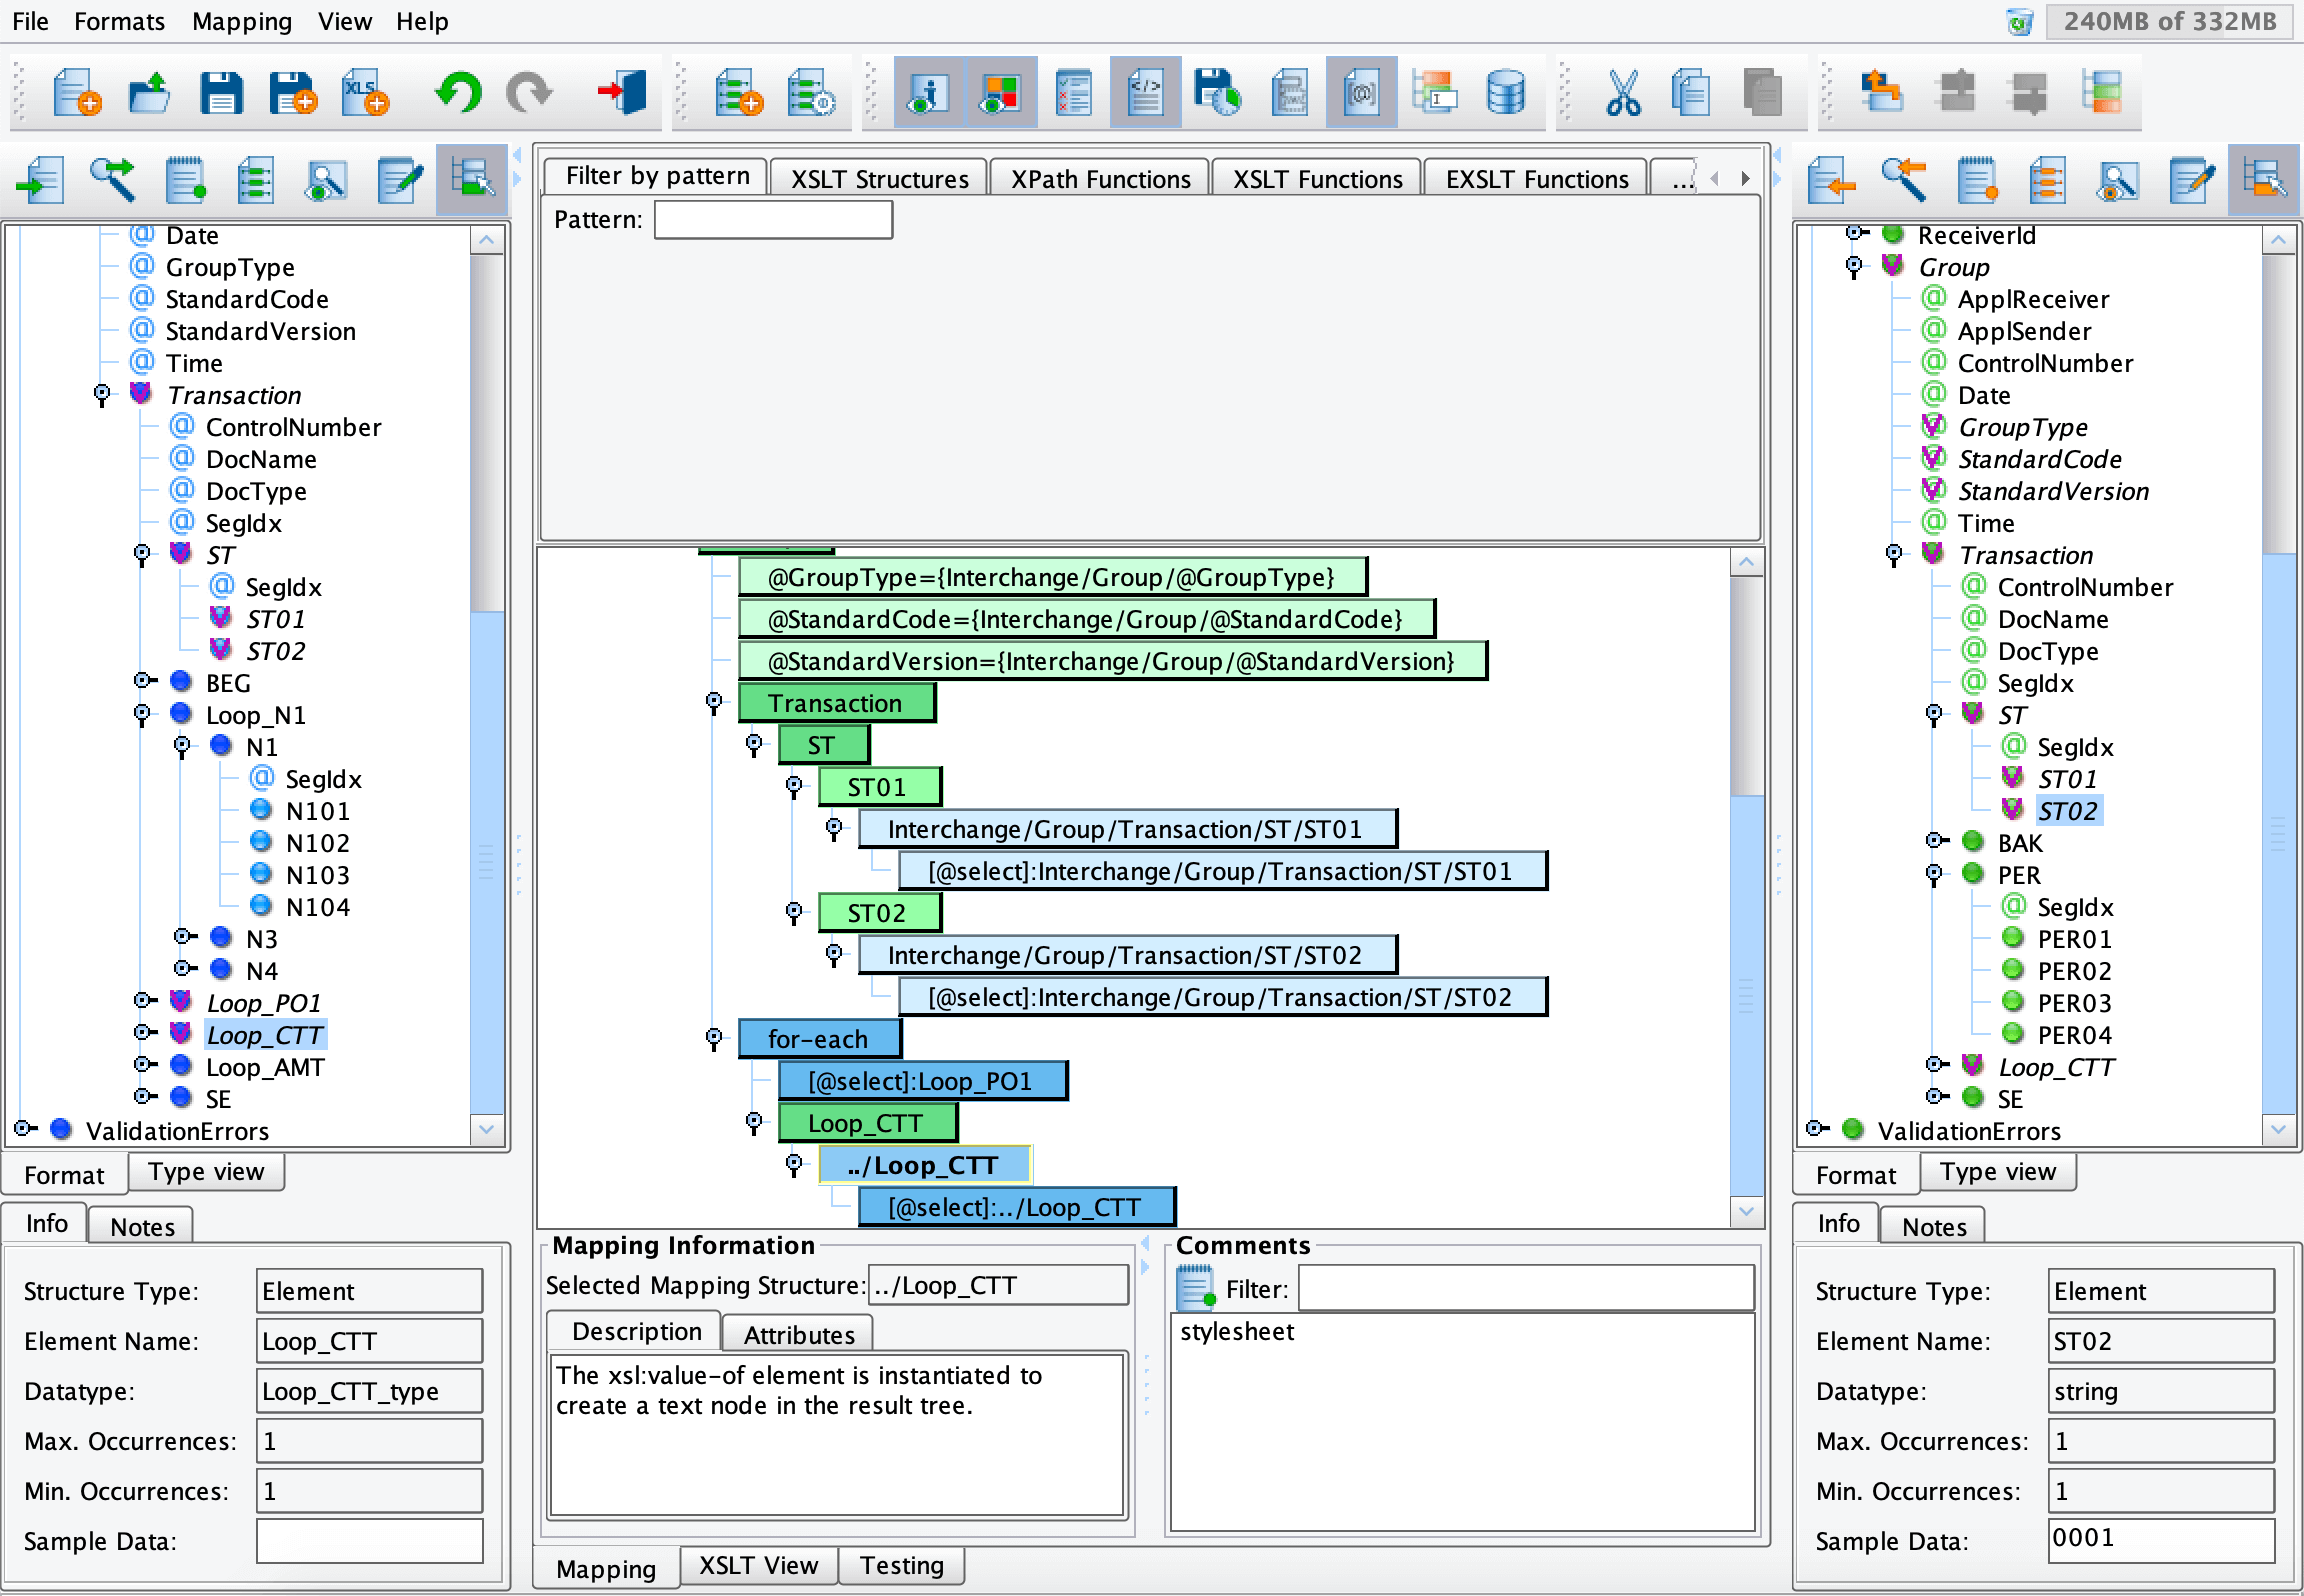 X12 EDI 997 transaction example in PilotFish Data Mapper